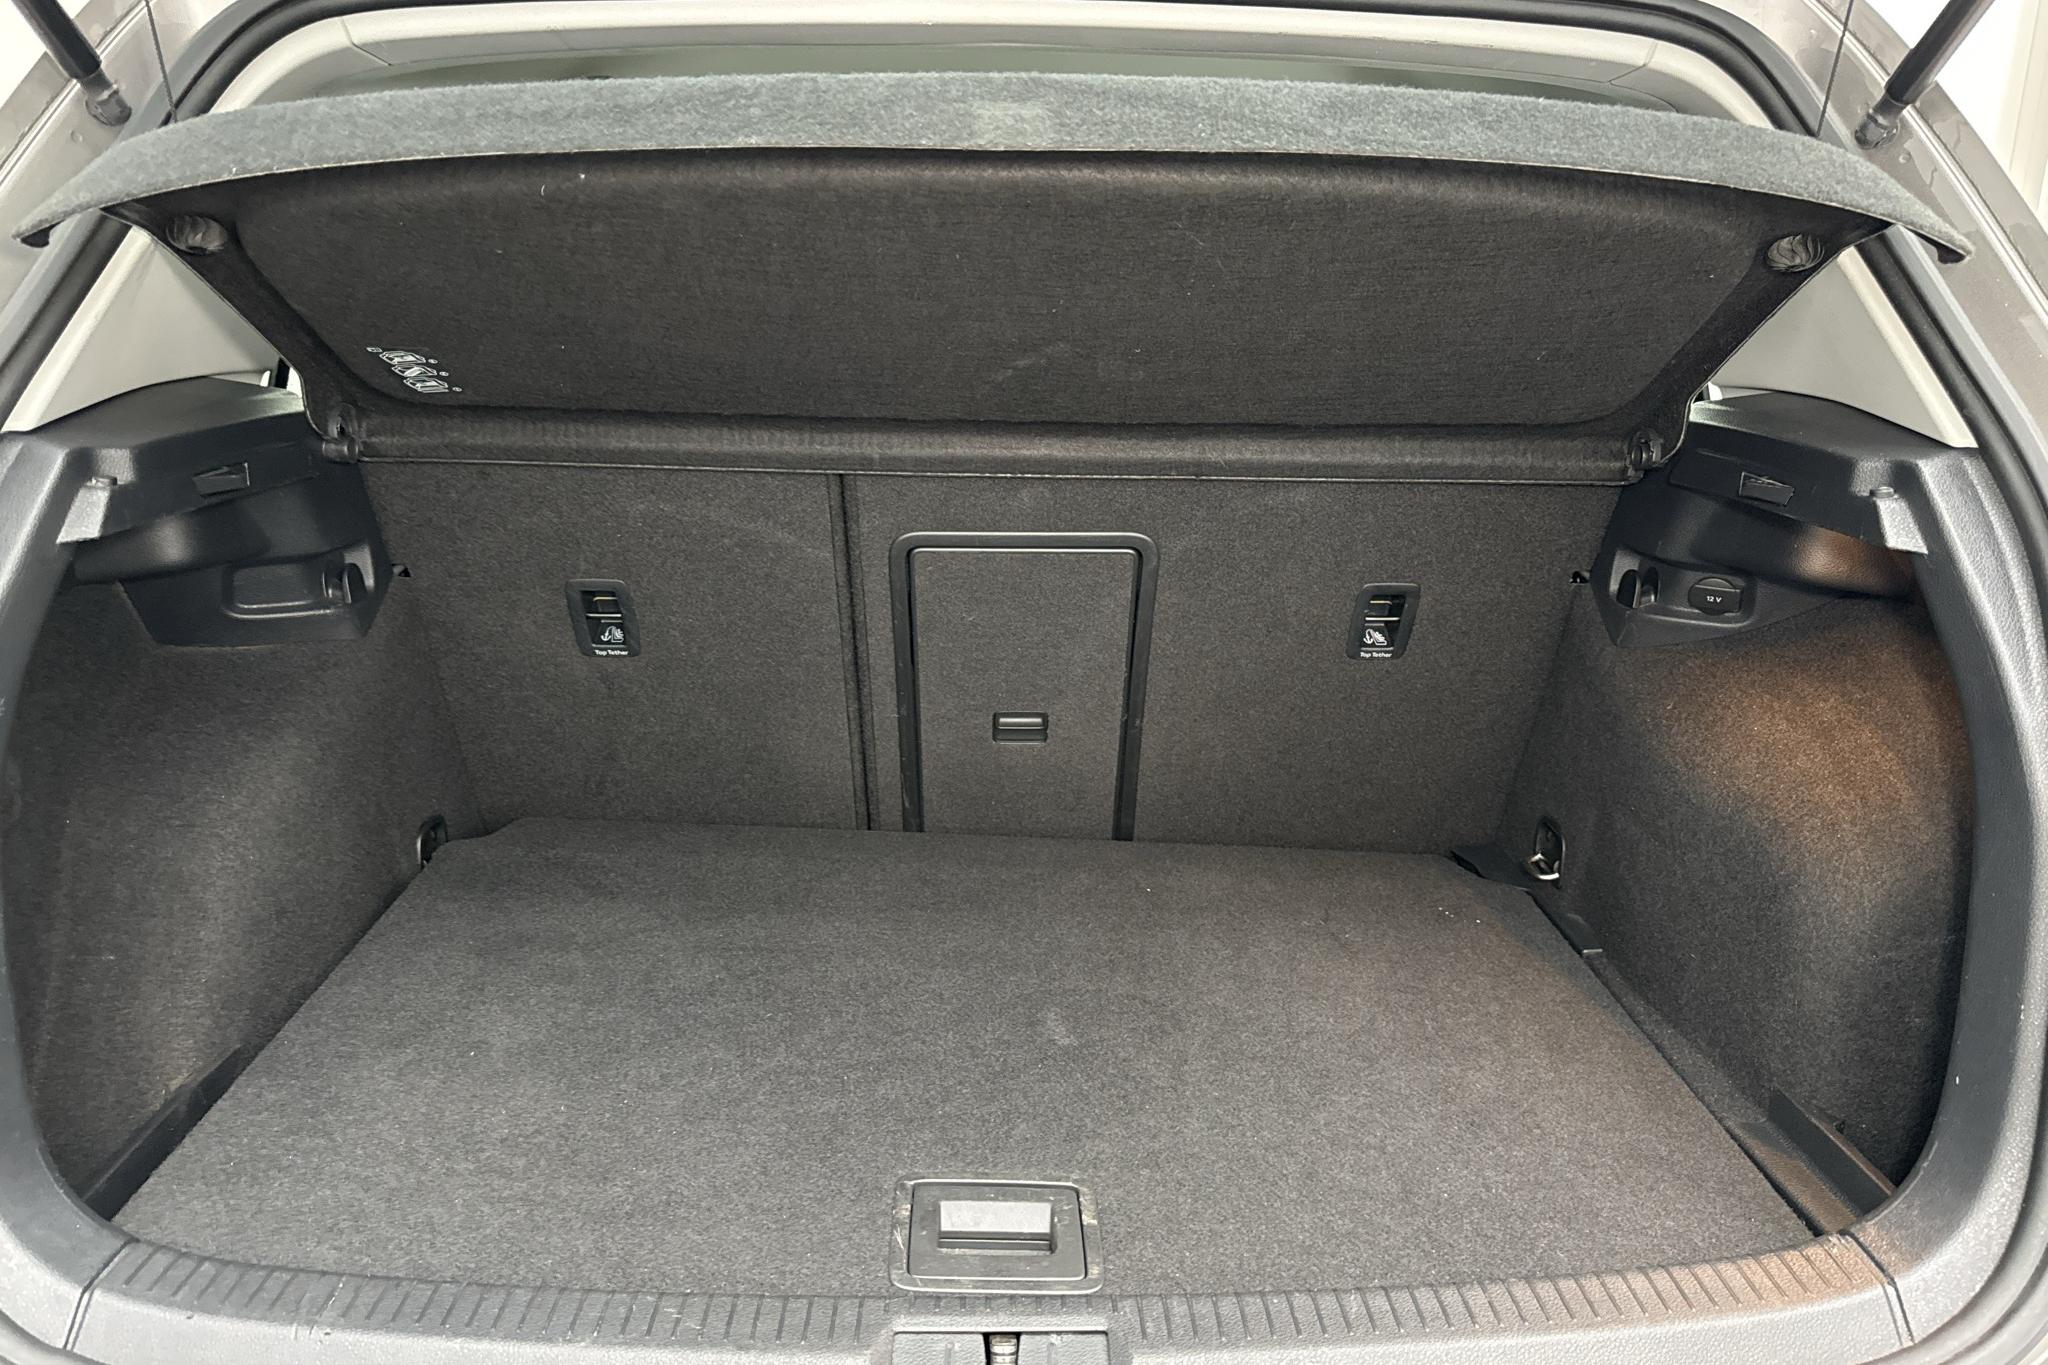 VW Golf VII 1.2 TSI 5dr (105hk) - 125 390 km - Manual - gray - 2014